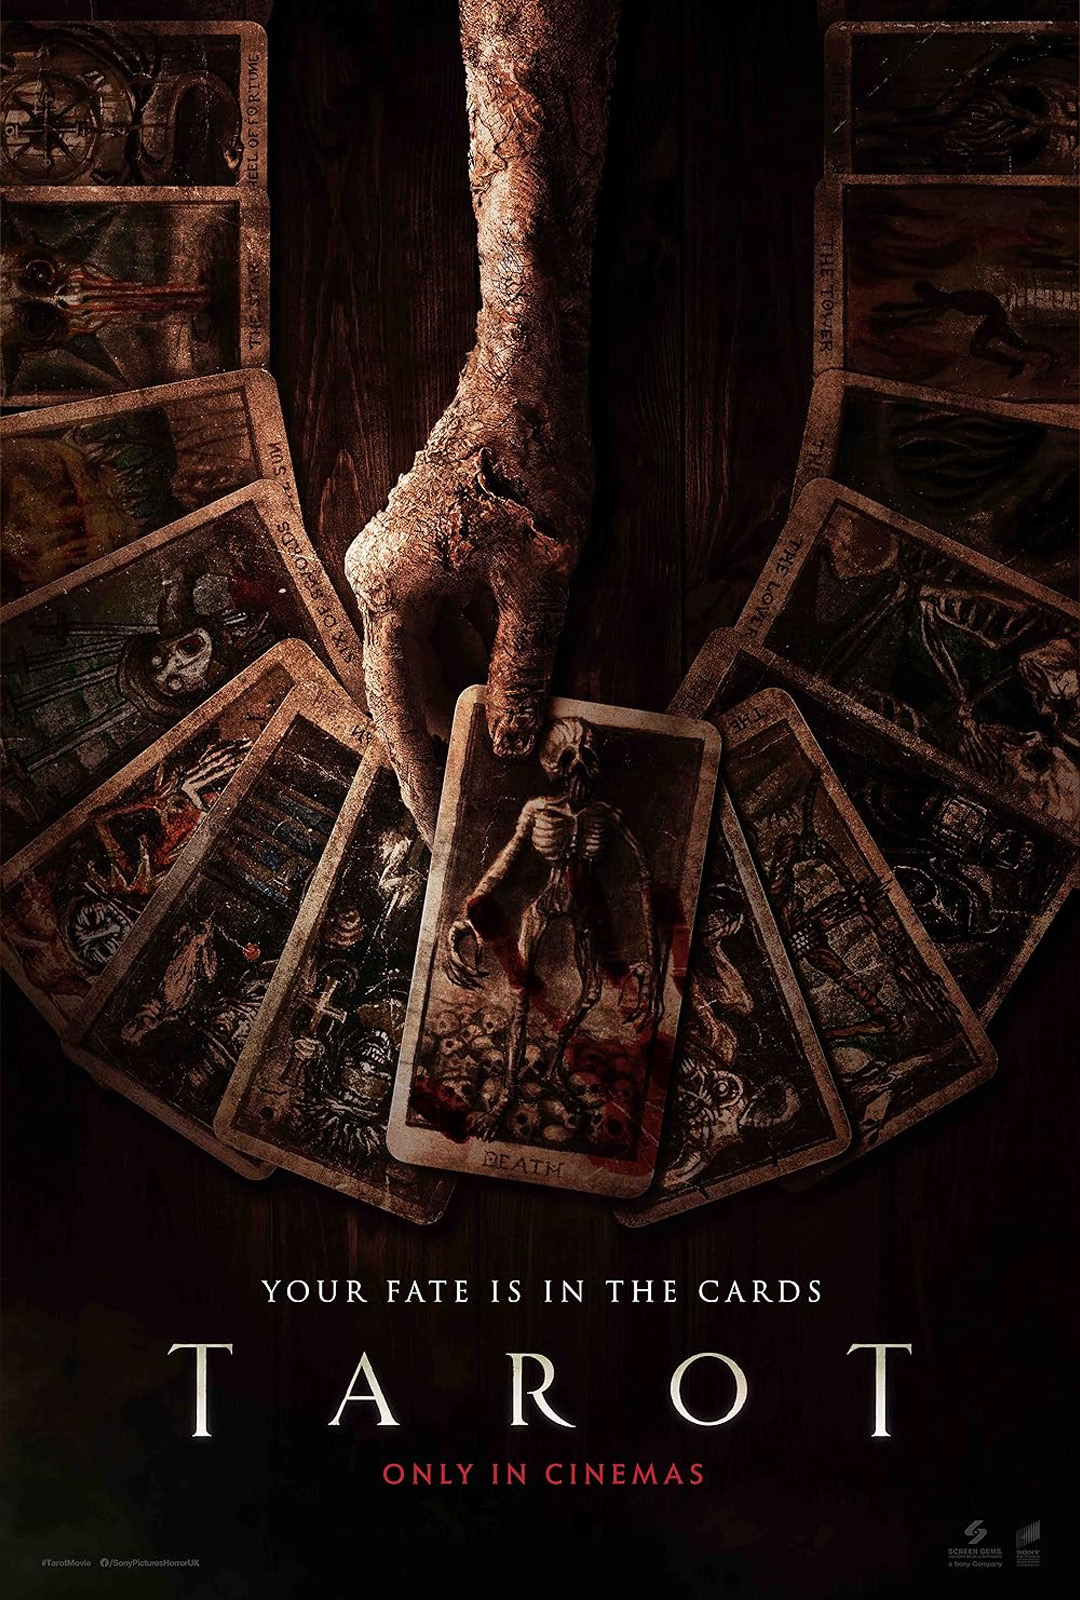 Movie Poster: Tarot de la muerte